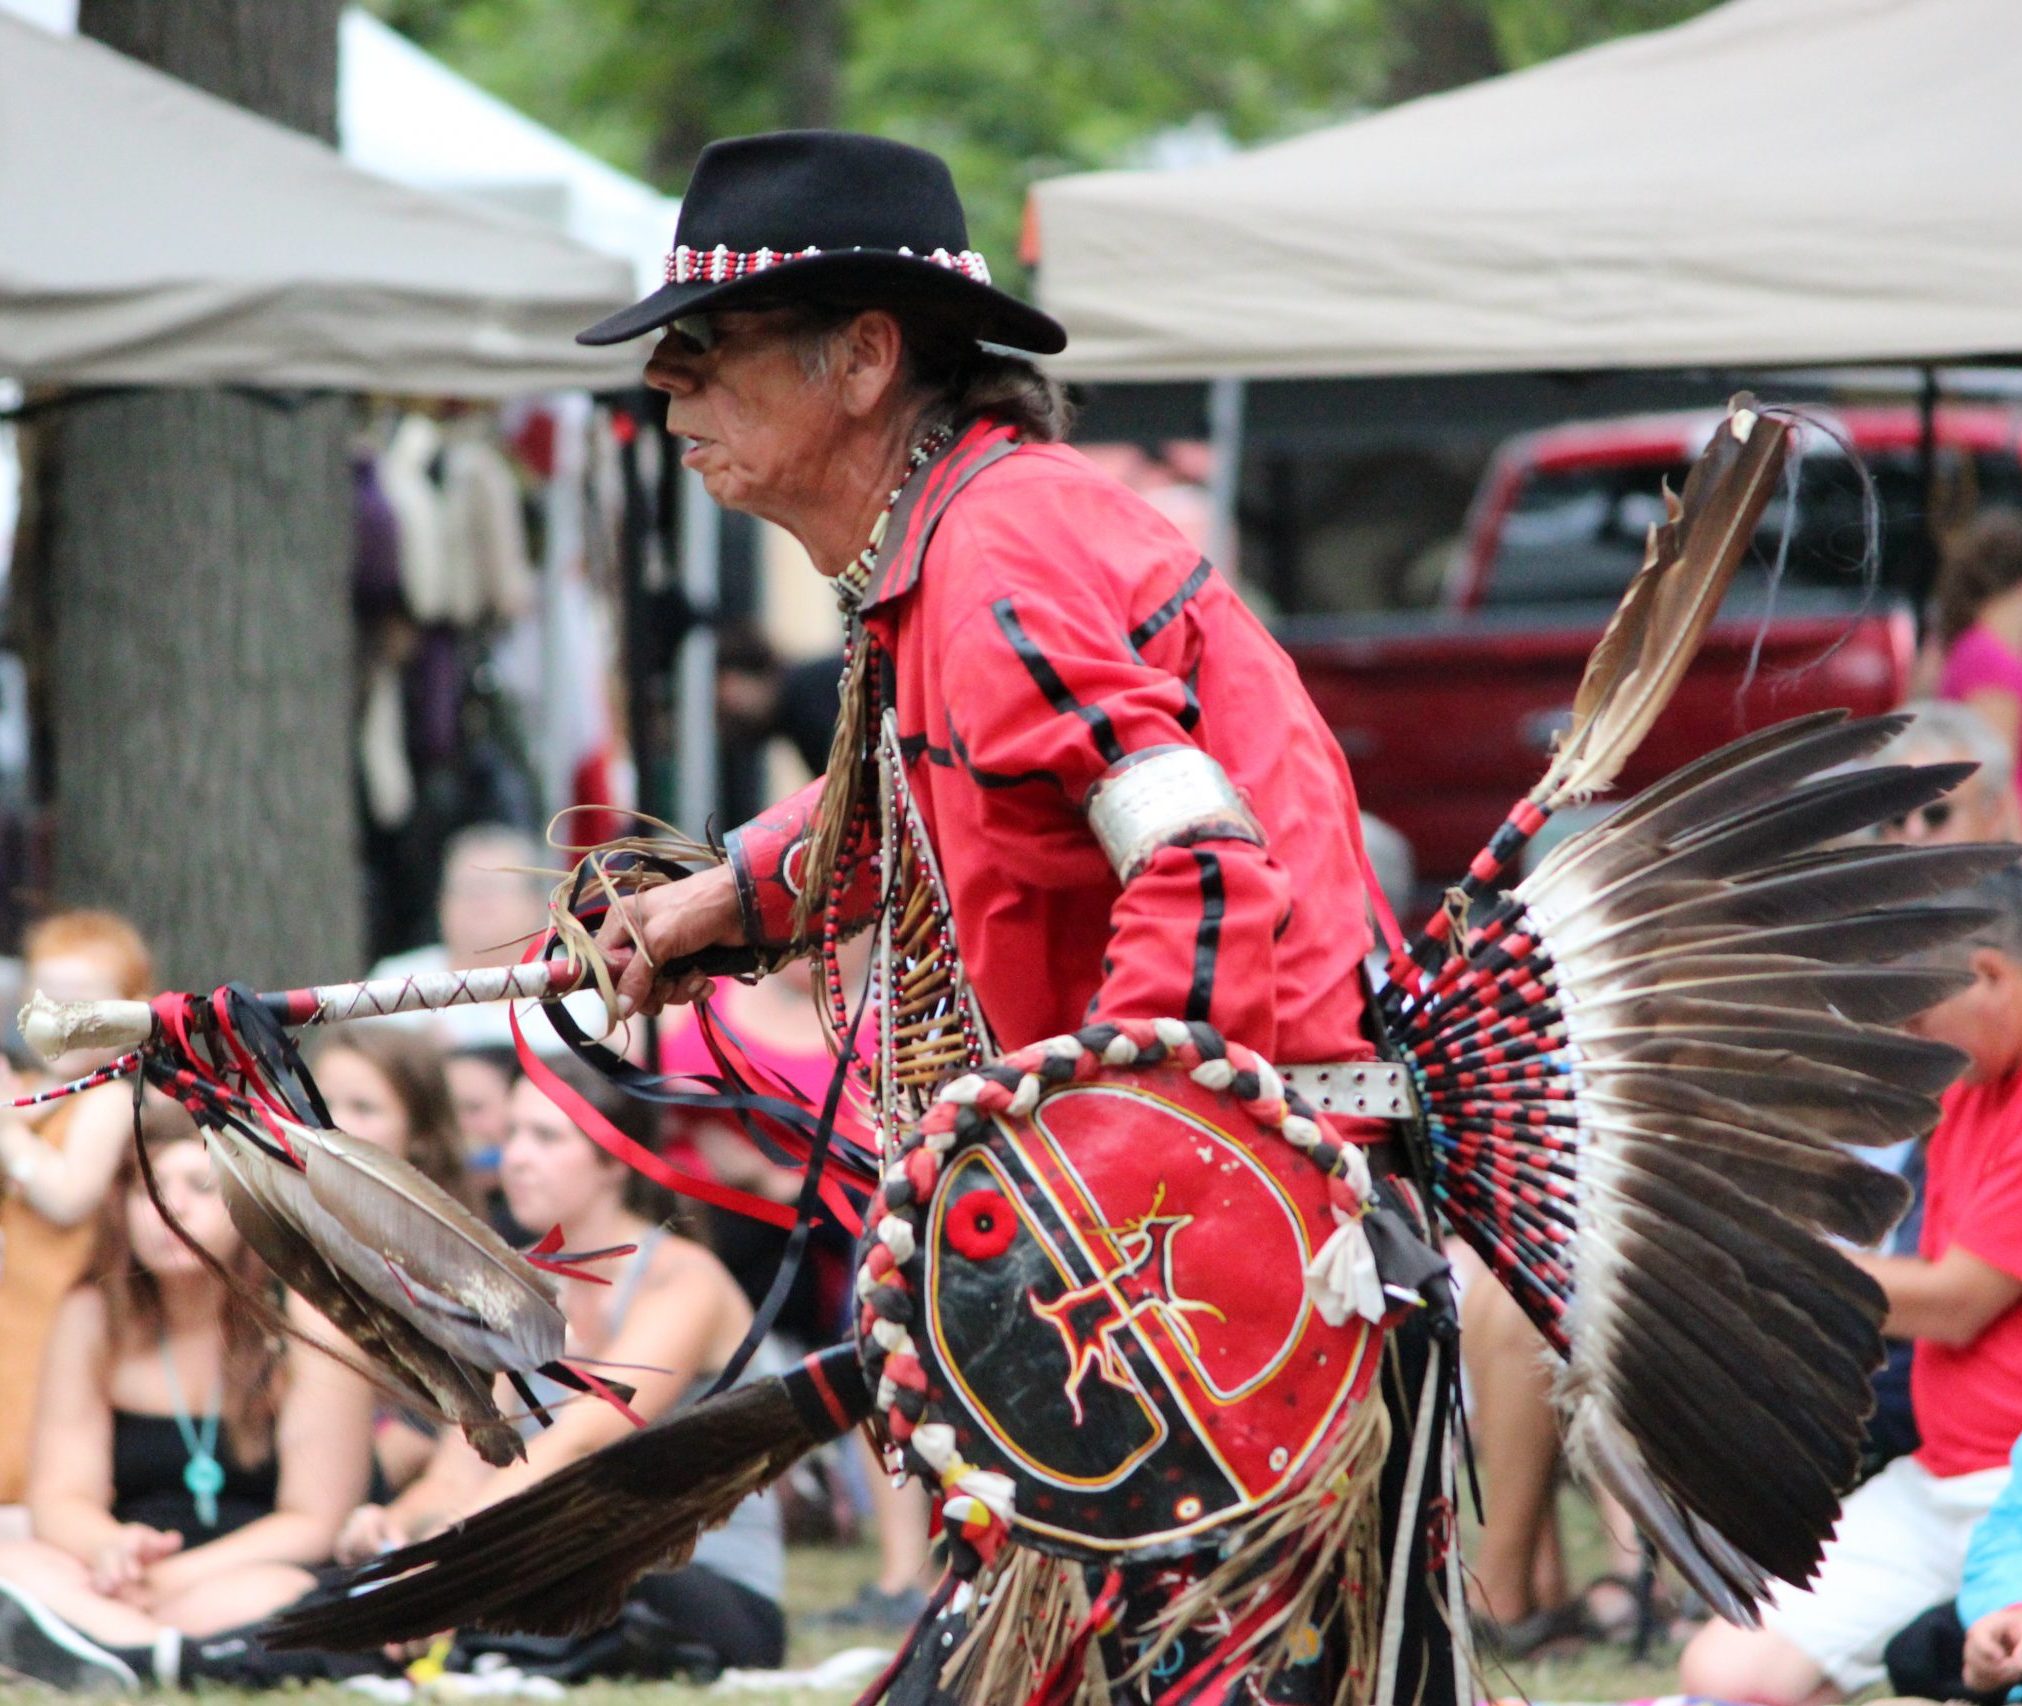 A man dances at a Pow Wow wearing traditional regalia.